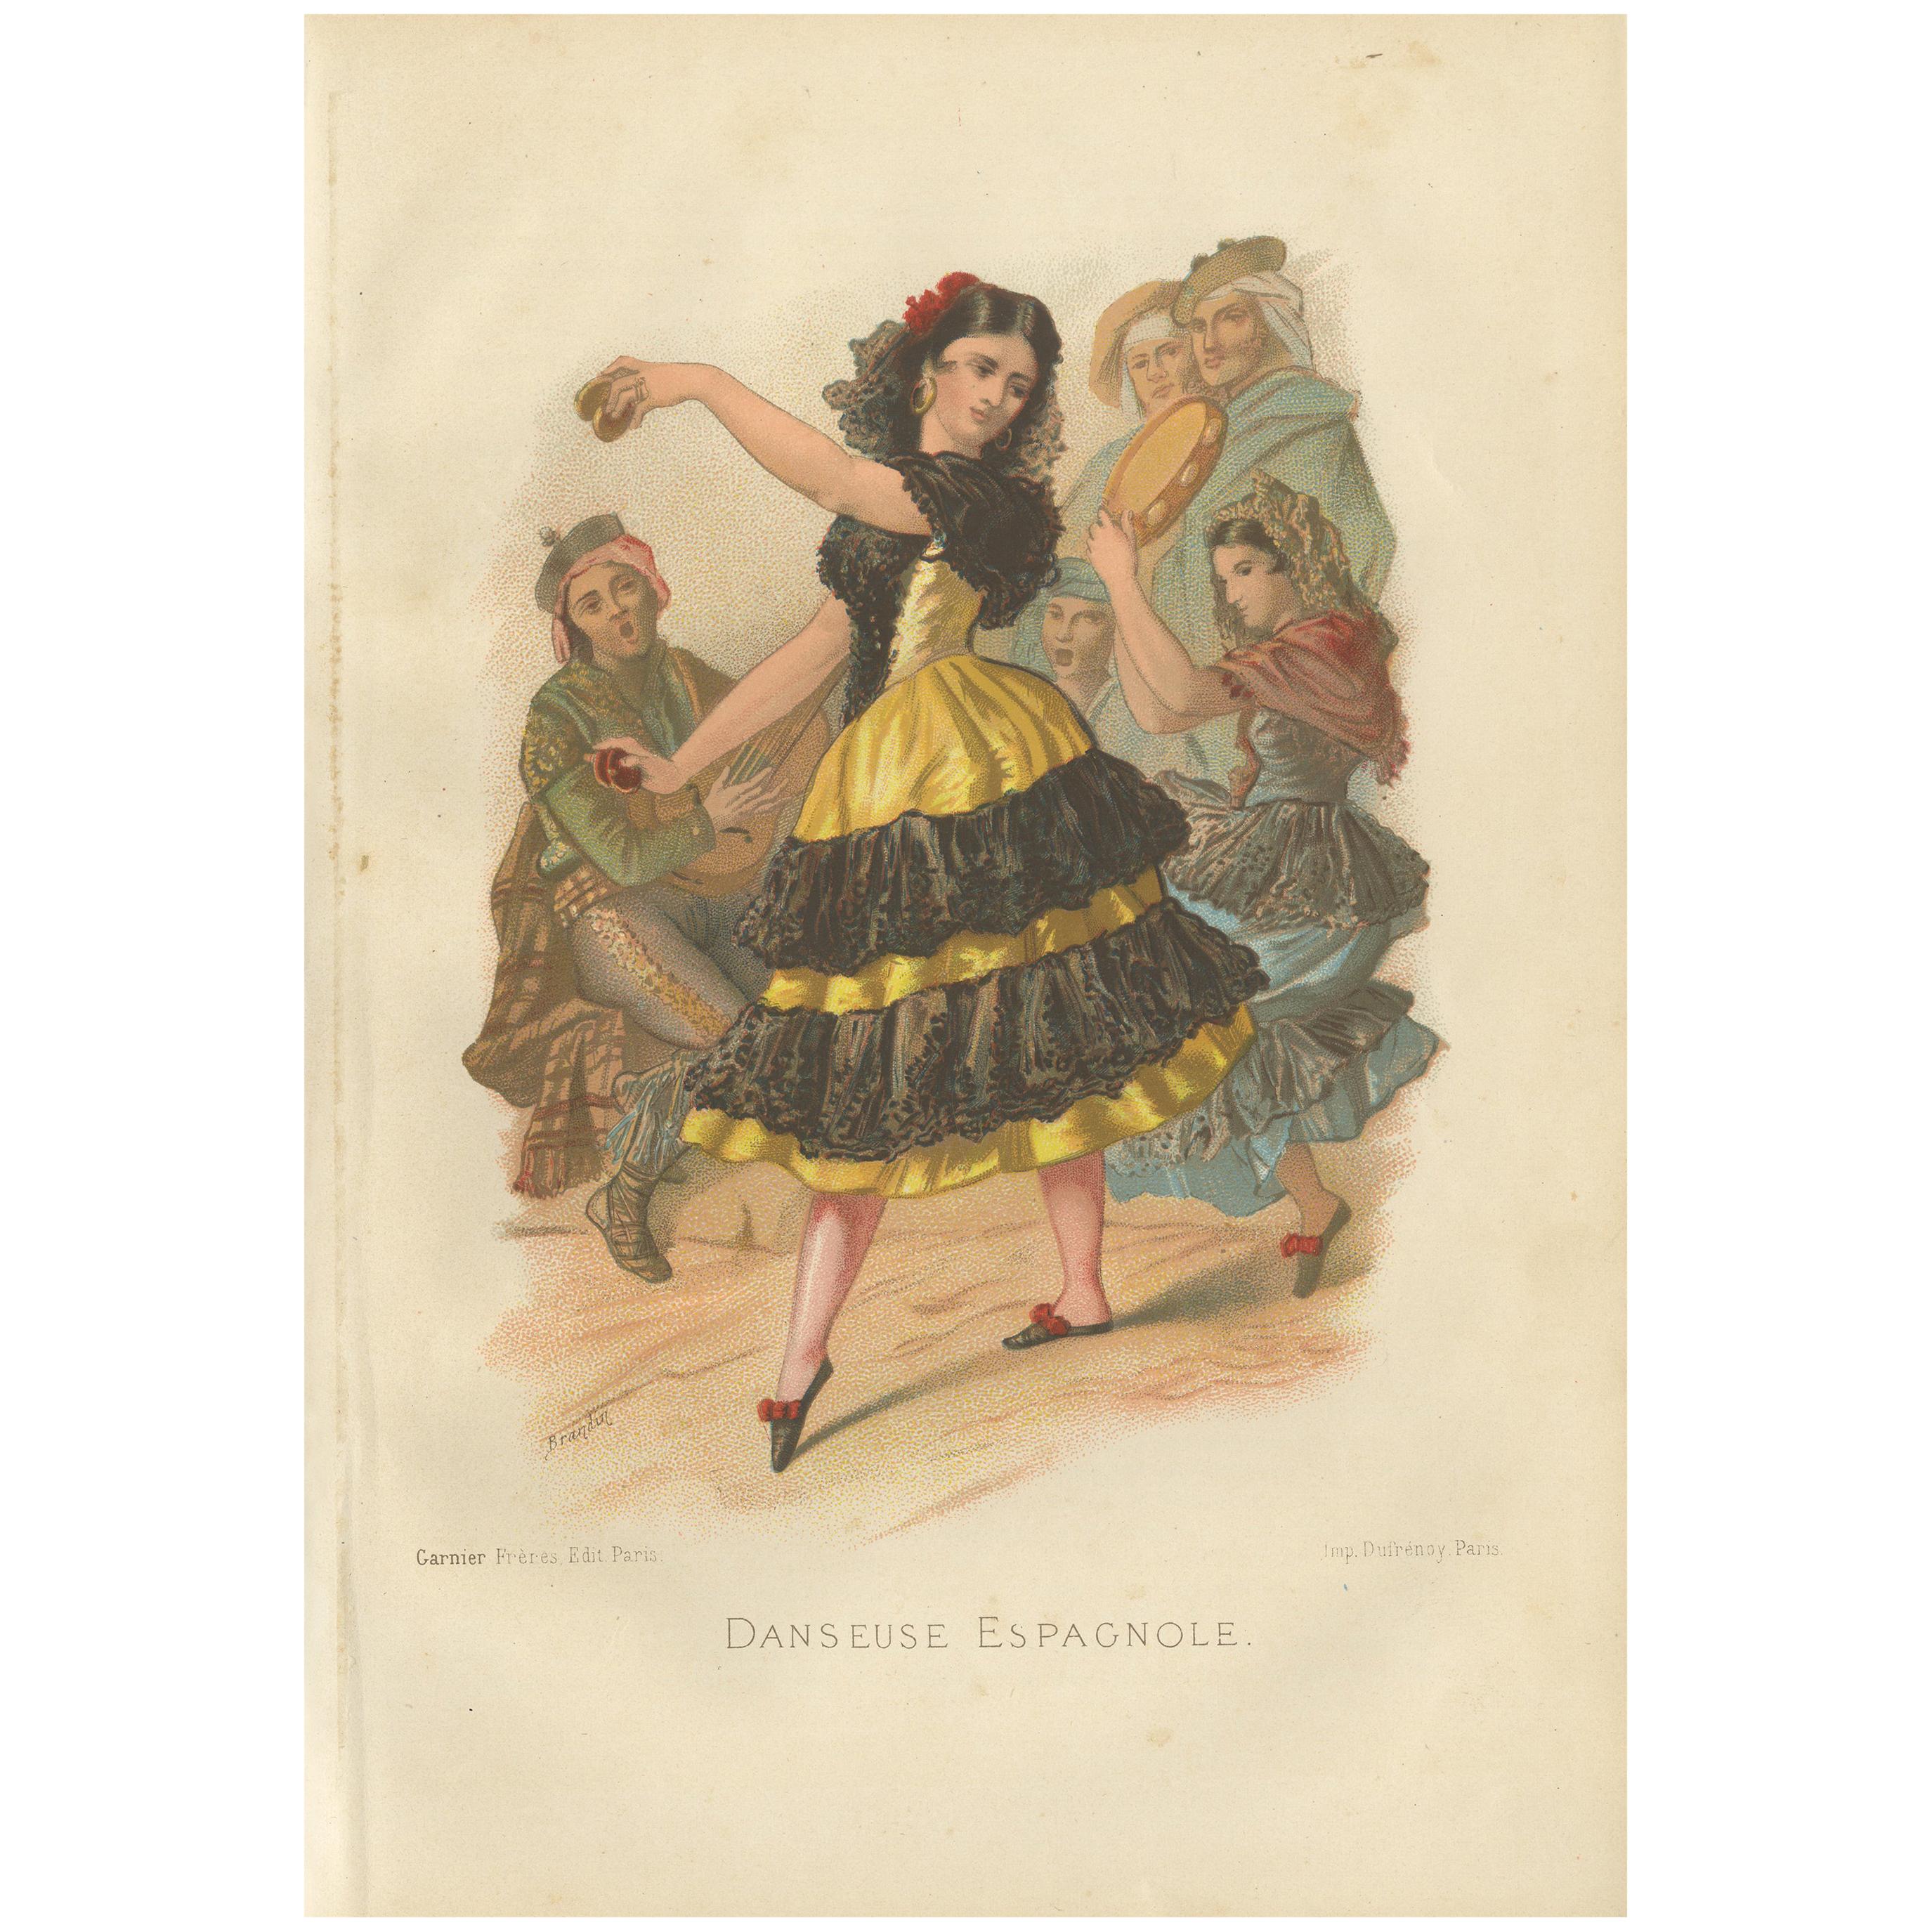 Antique Print of a Spanish Dancer by Grégoire, 1883